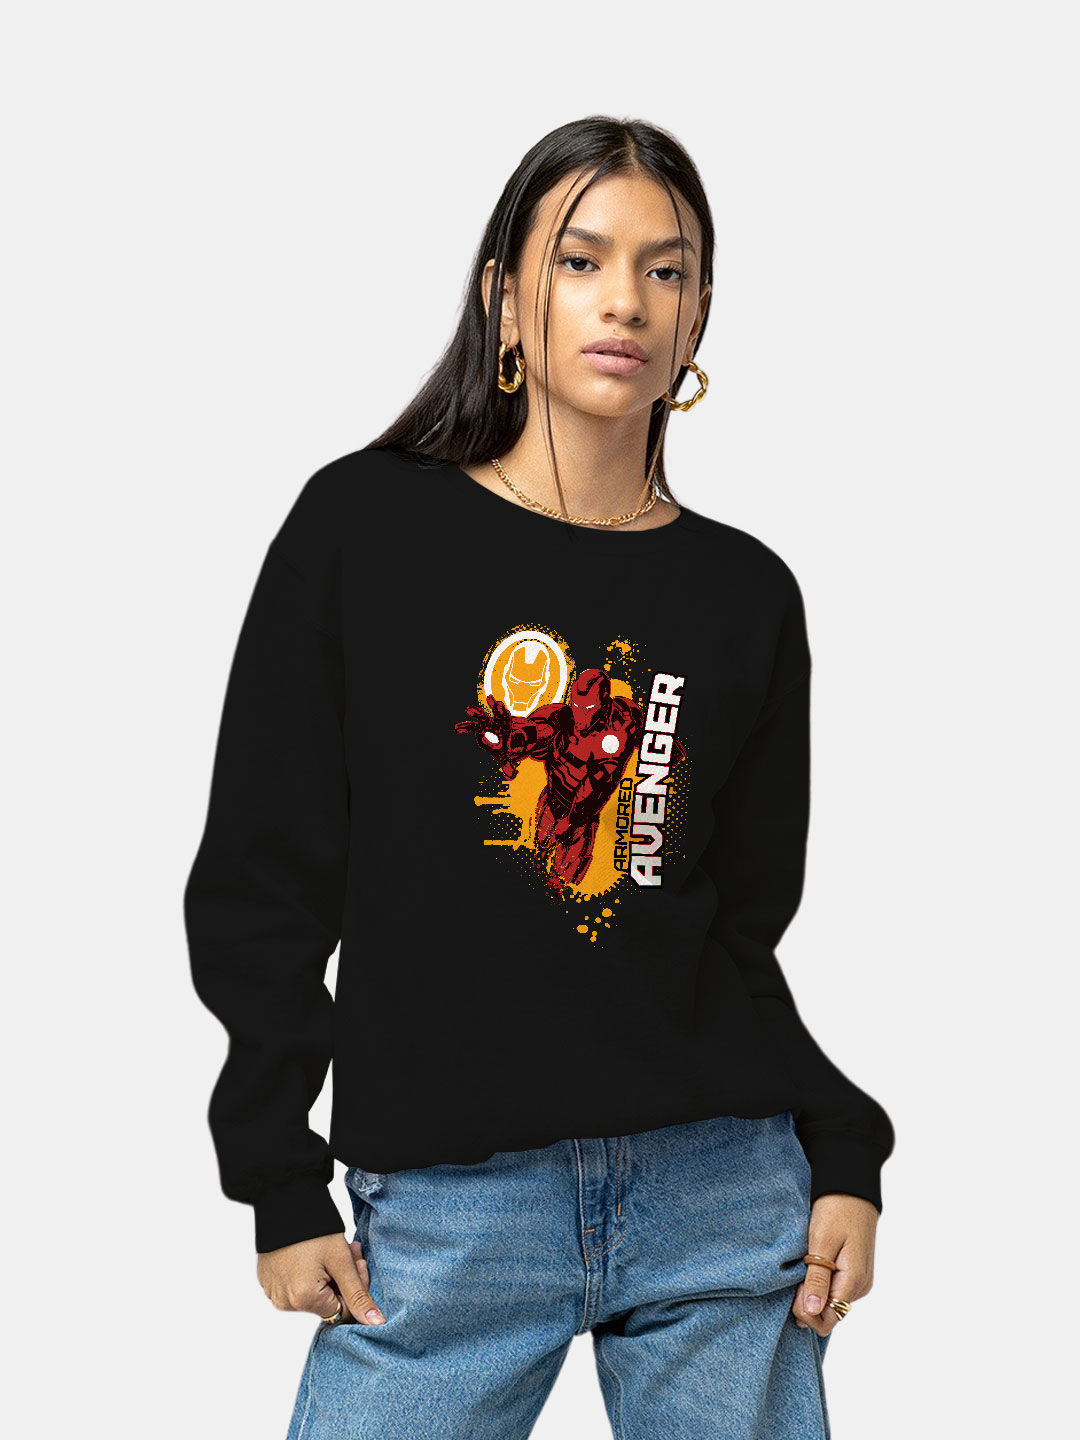 Buy Armored Avenger - Female Designer Sweatshirt Sweatshirts Online